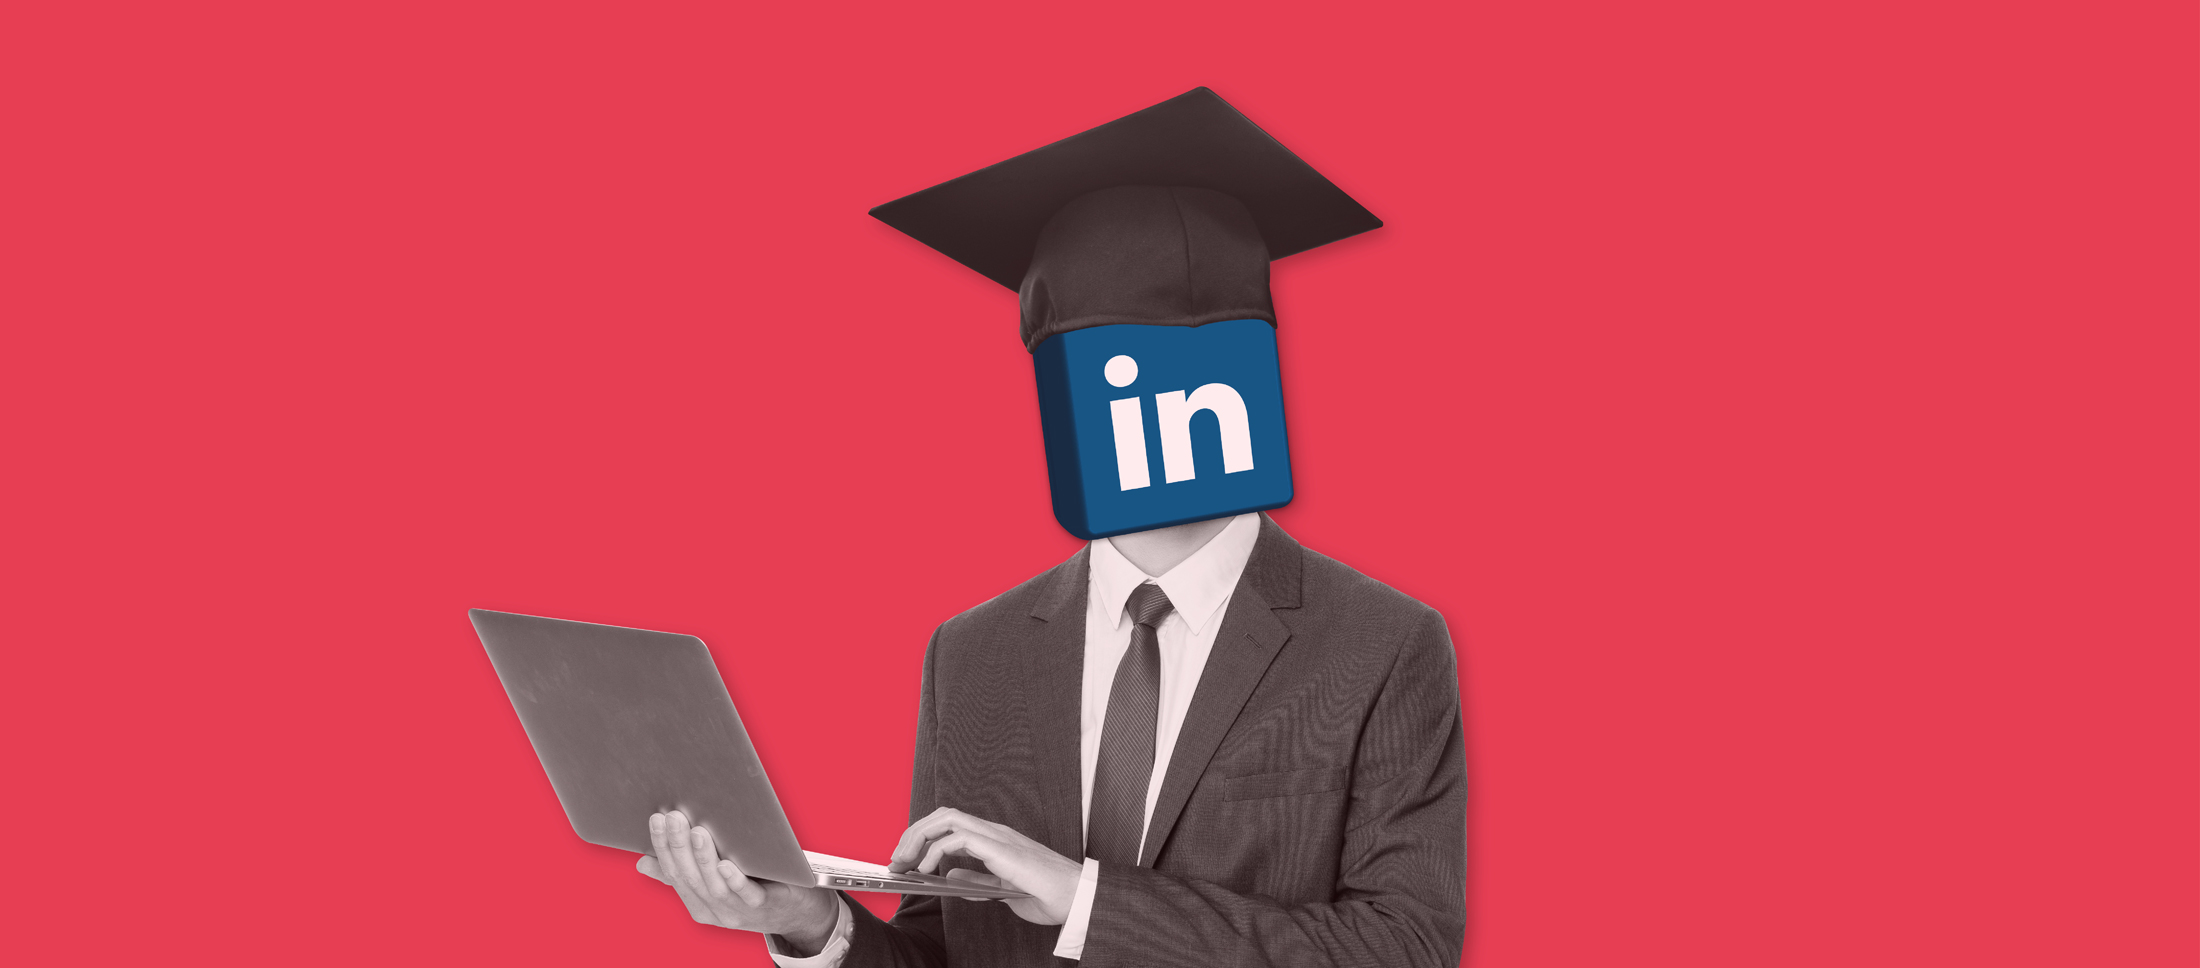 7 Ways to Use LinkedIn as a Marketing Tool